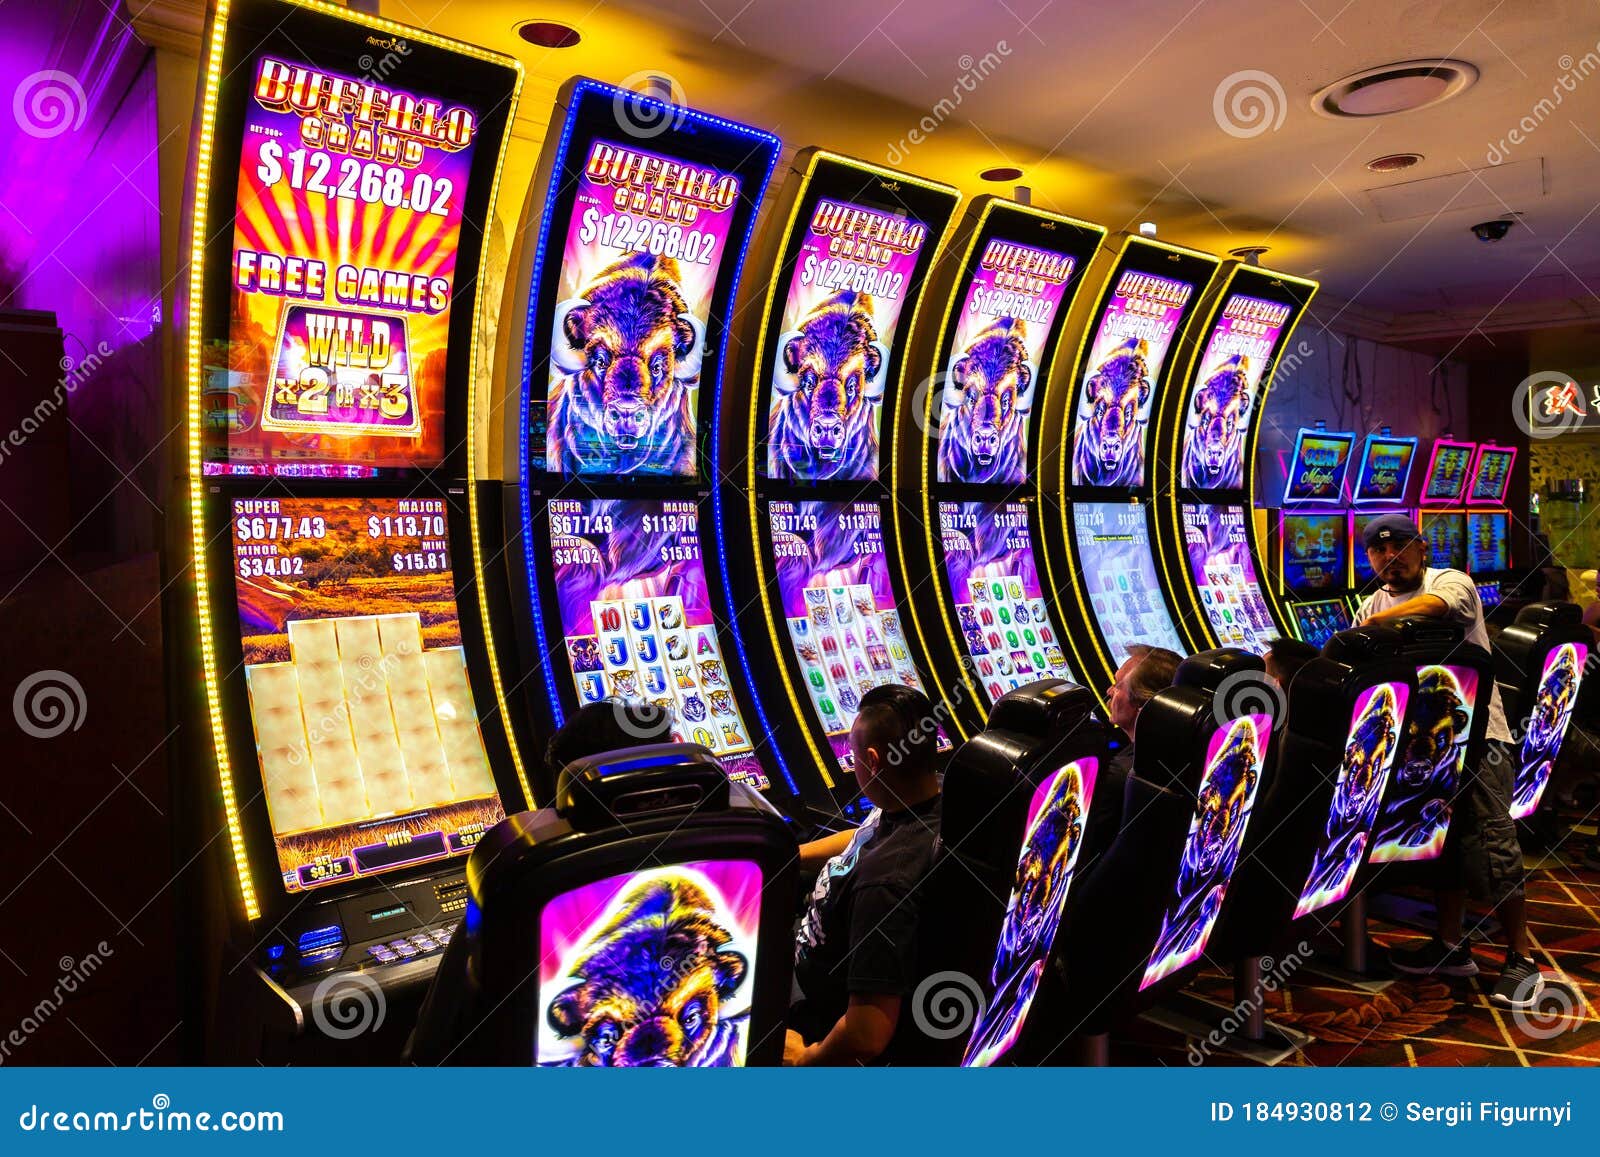 free casino slot machine games online